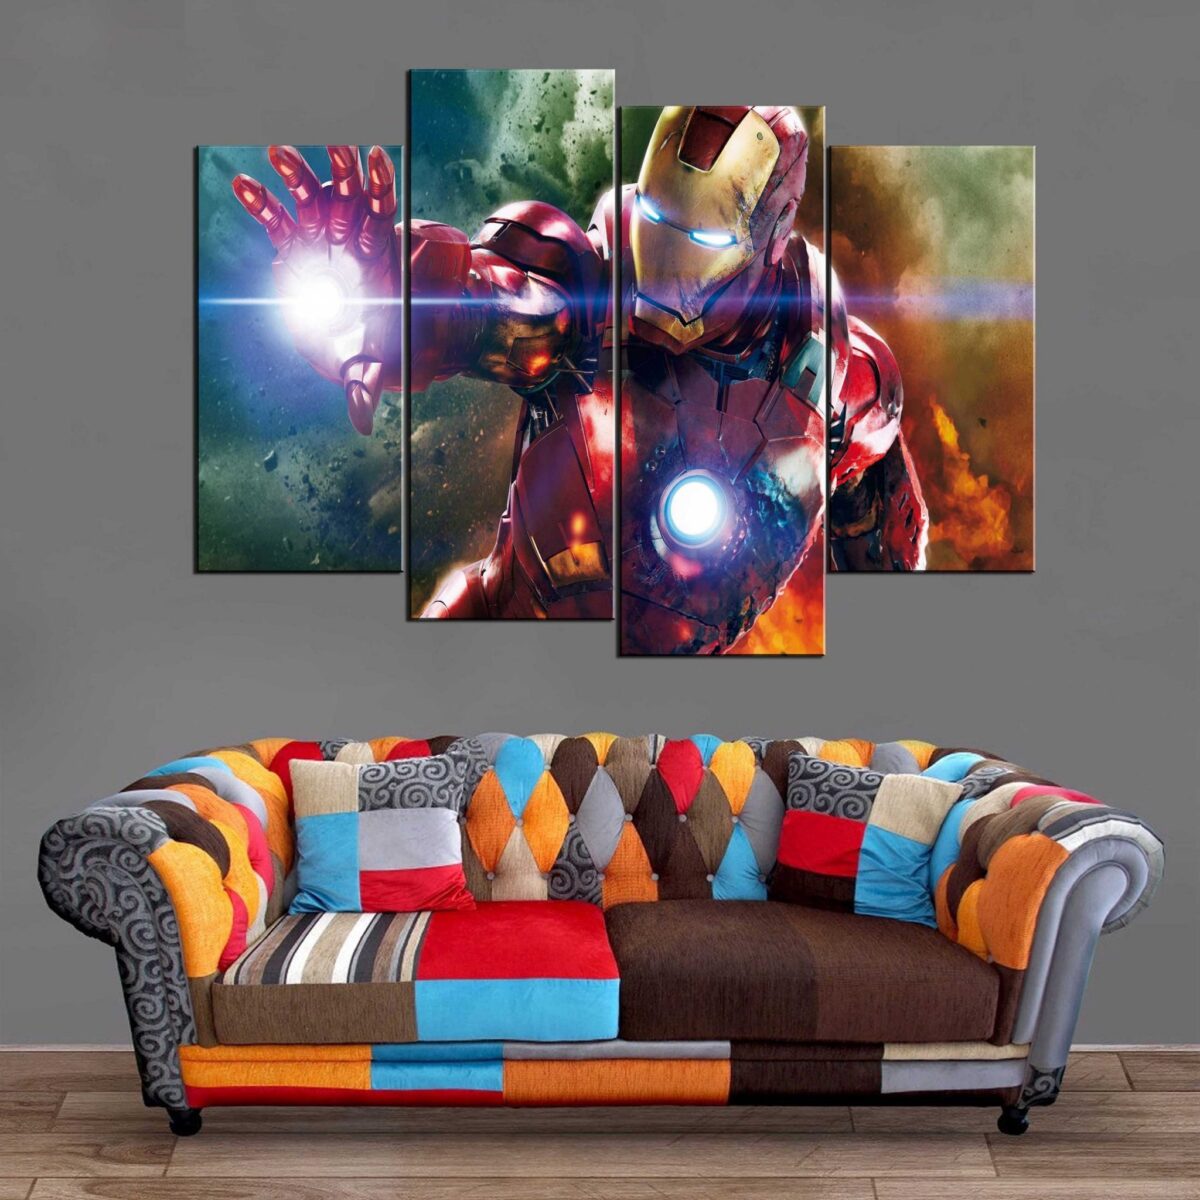 Décoration Murale Avengers Iron Man Attack